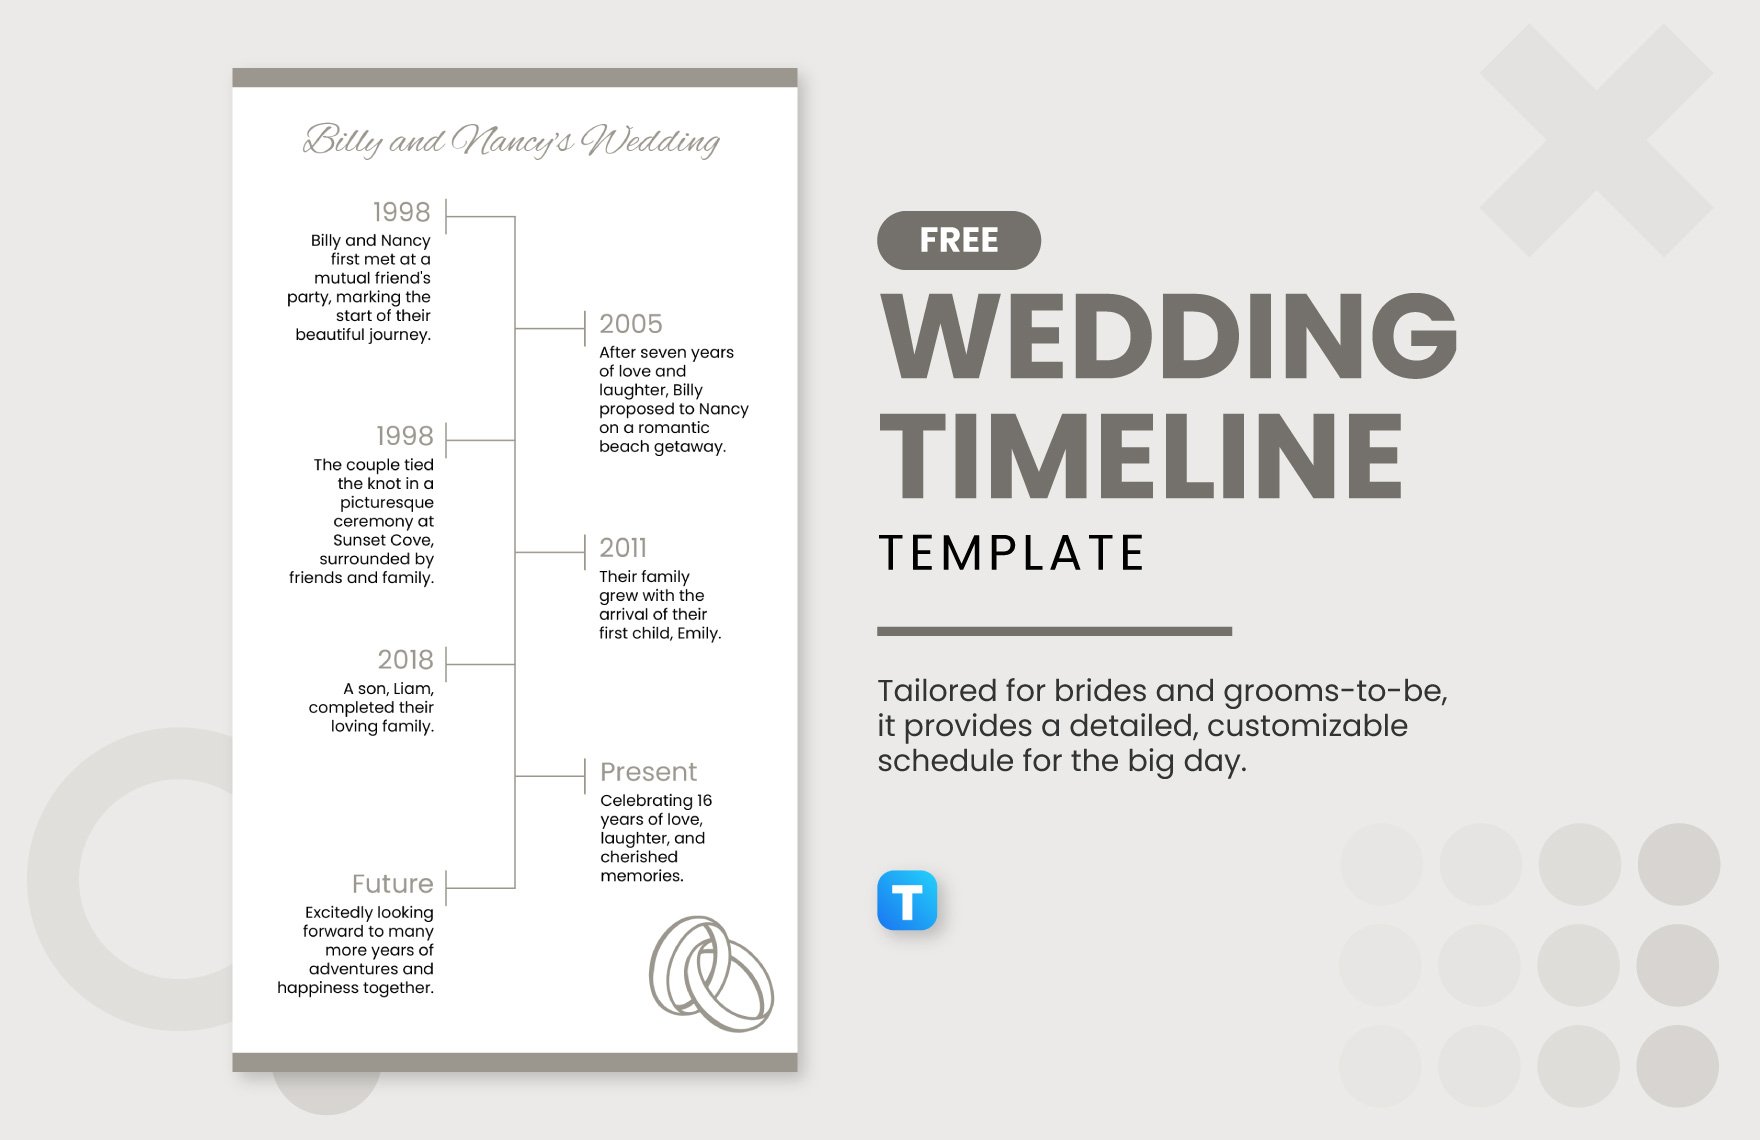 Free Wedding Timeline Template